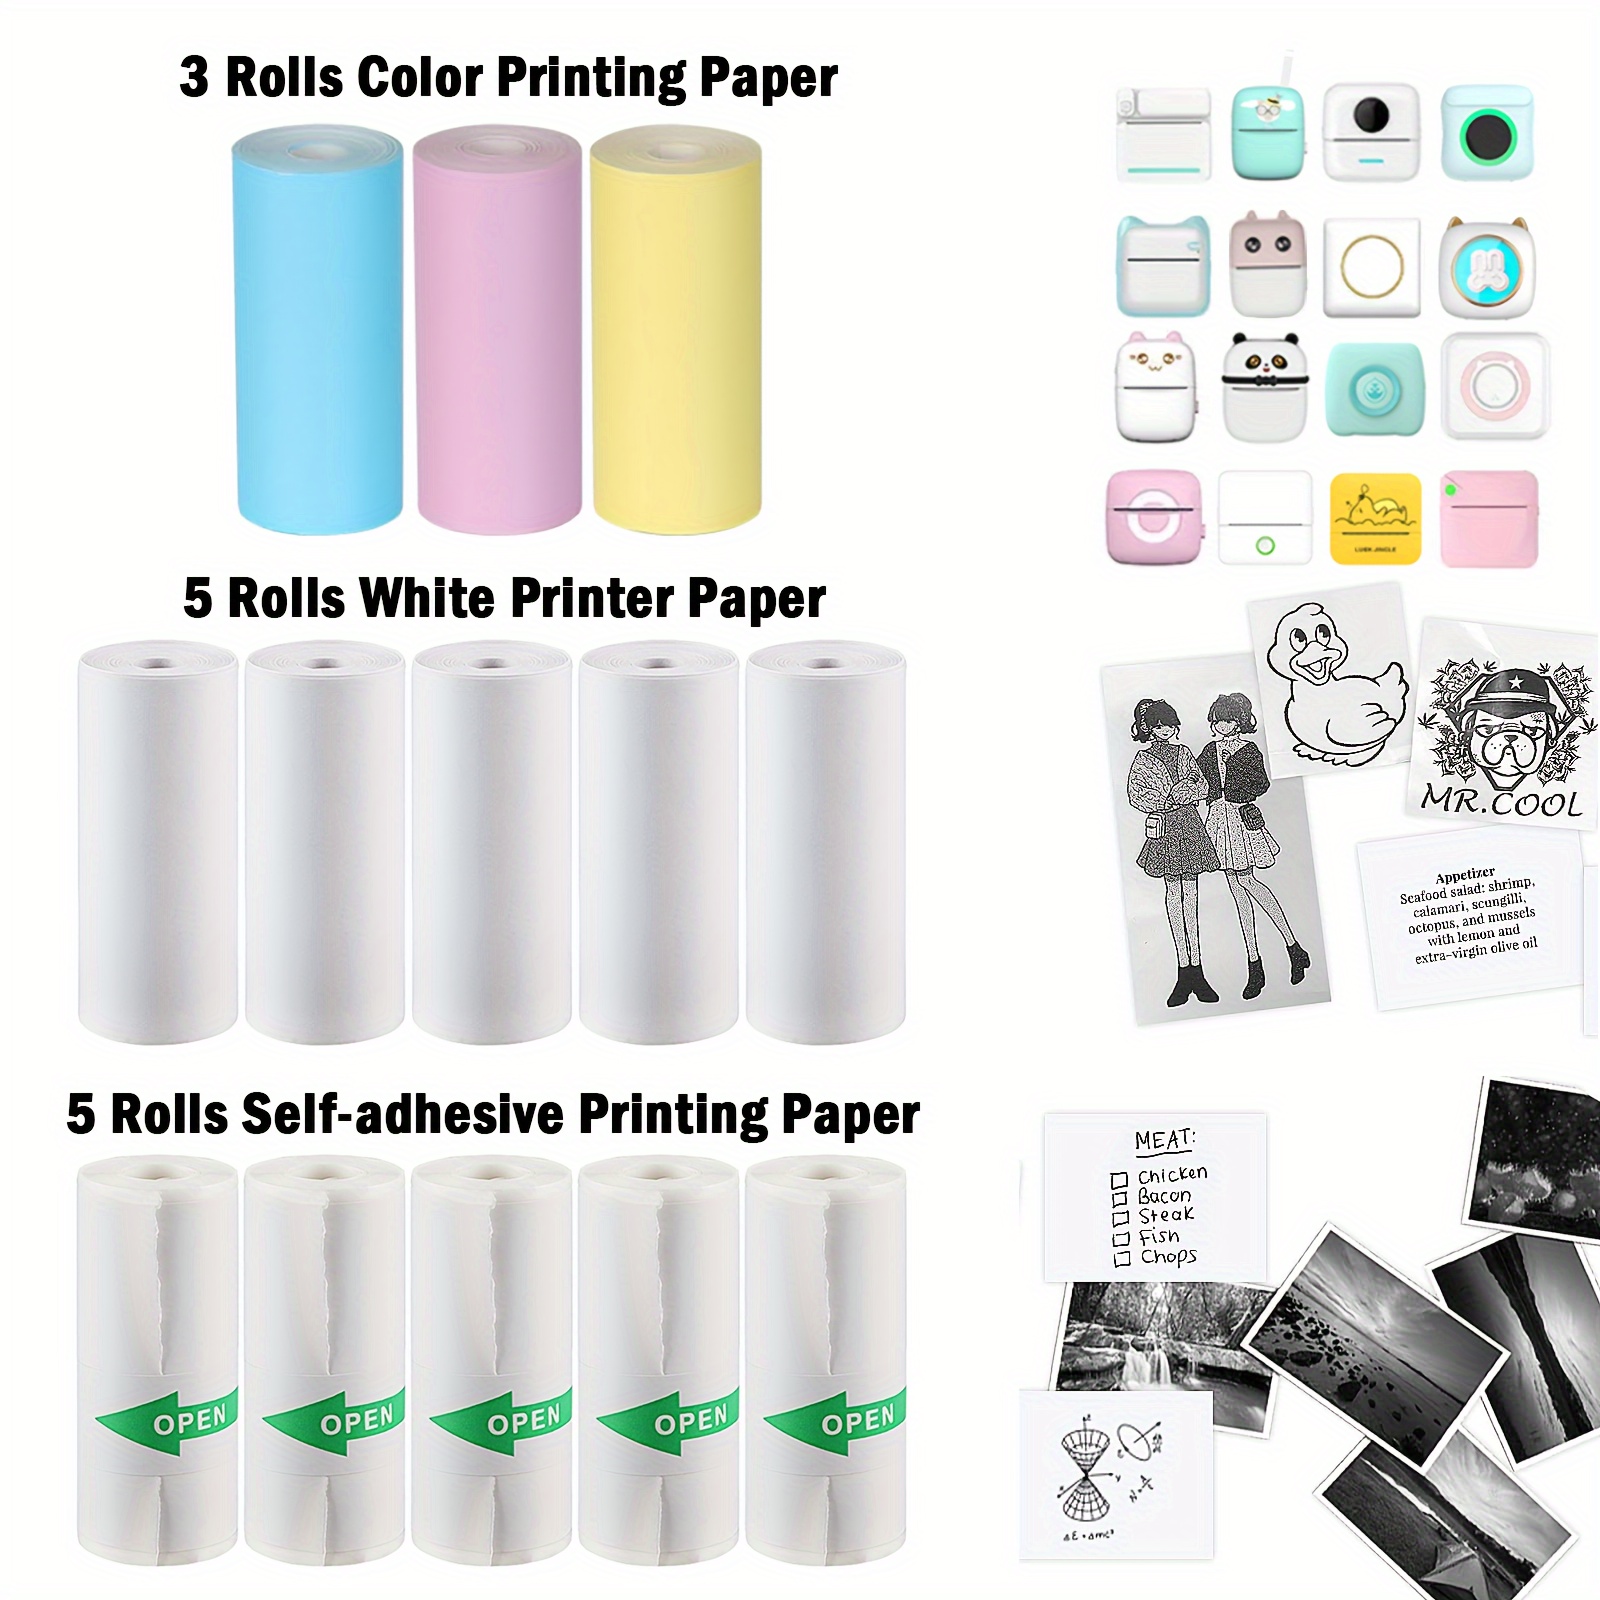 Self -Seal Laminating Sheets – Uinkit Printing Media On line Shop